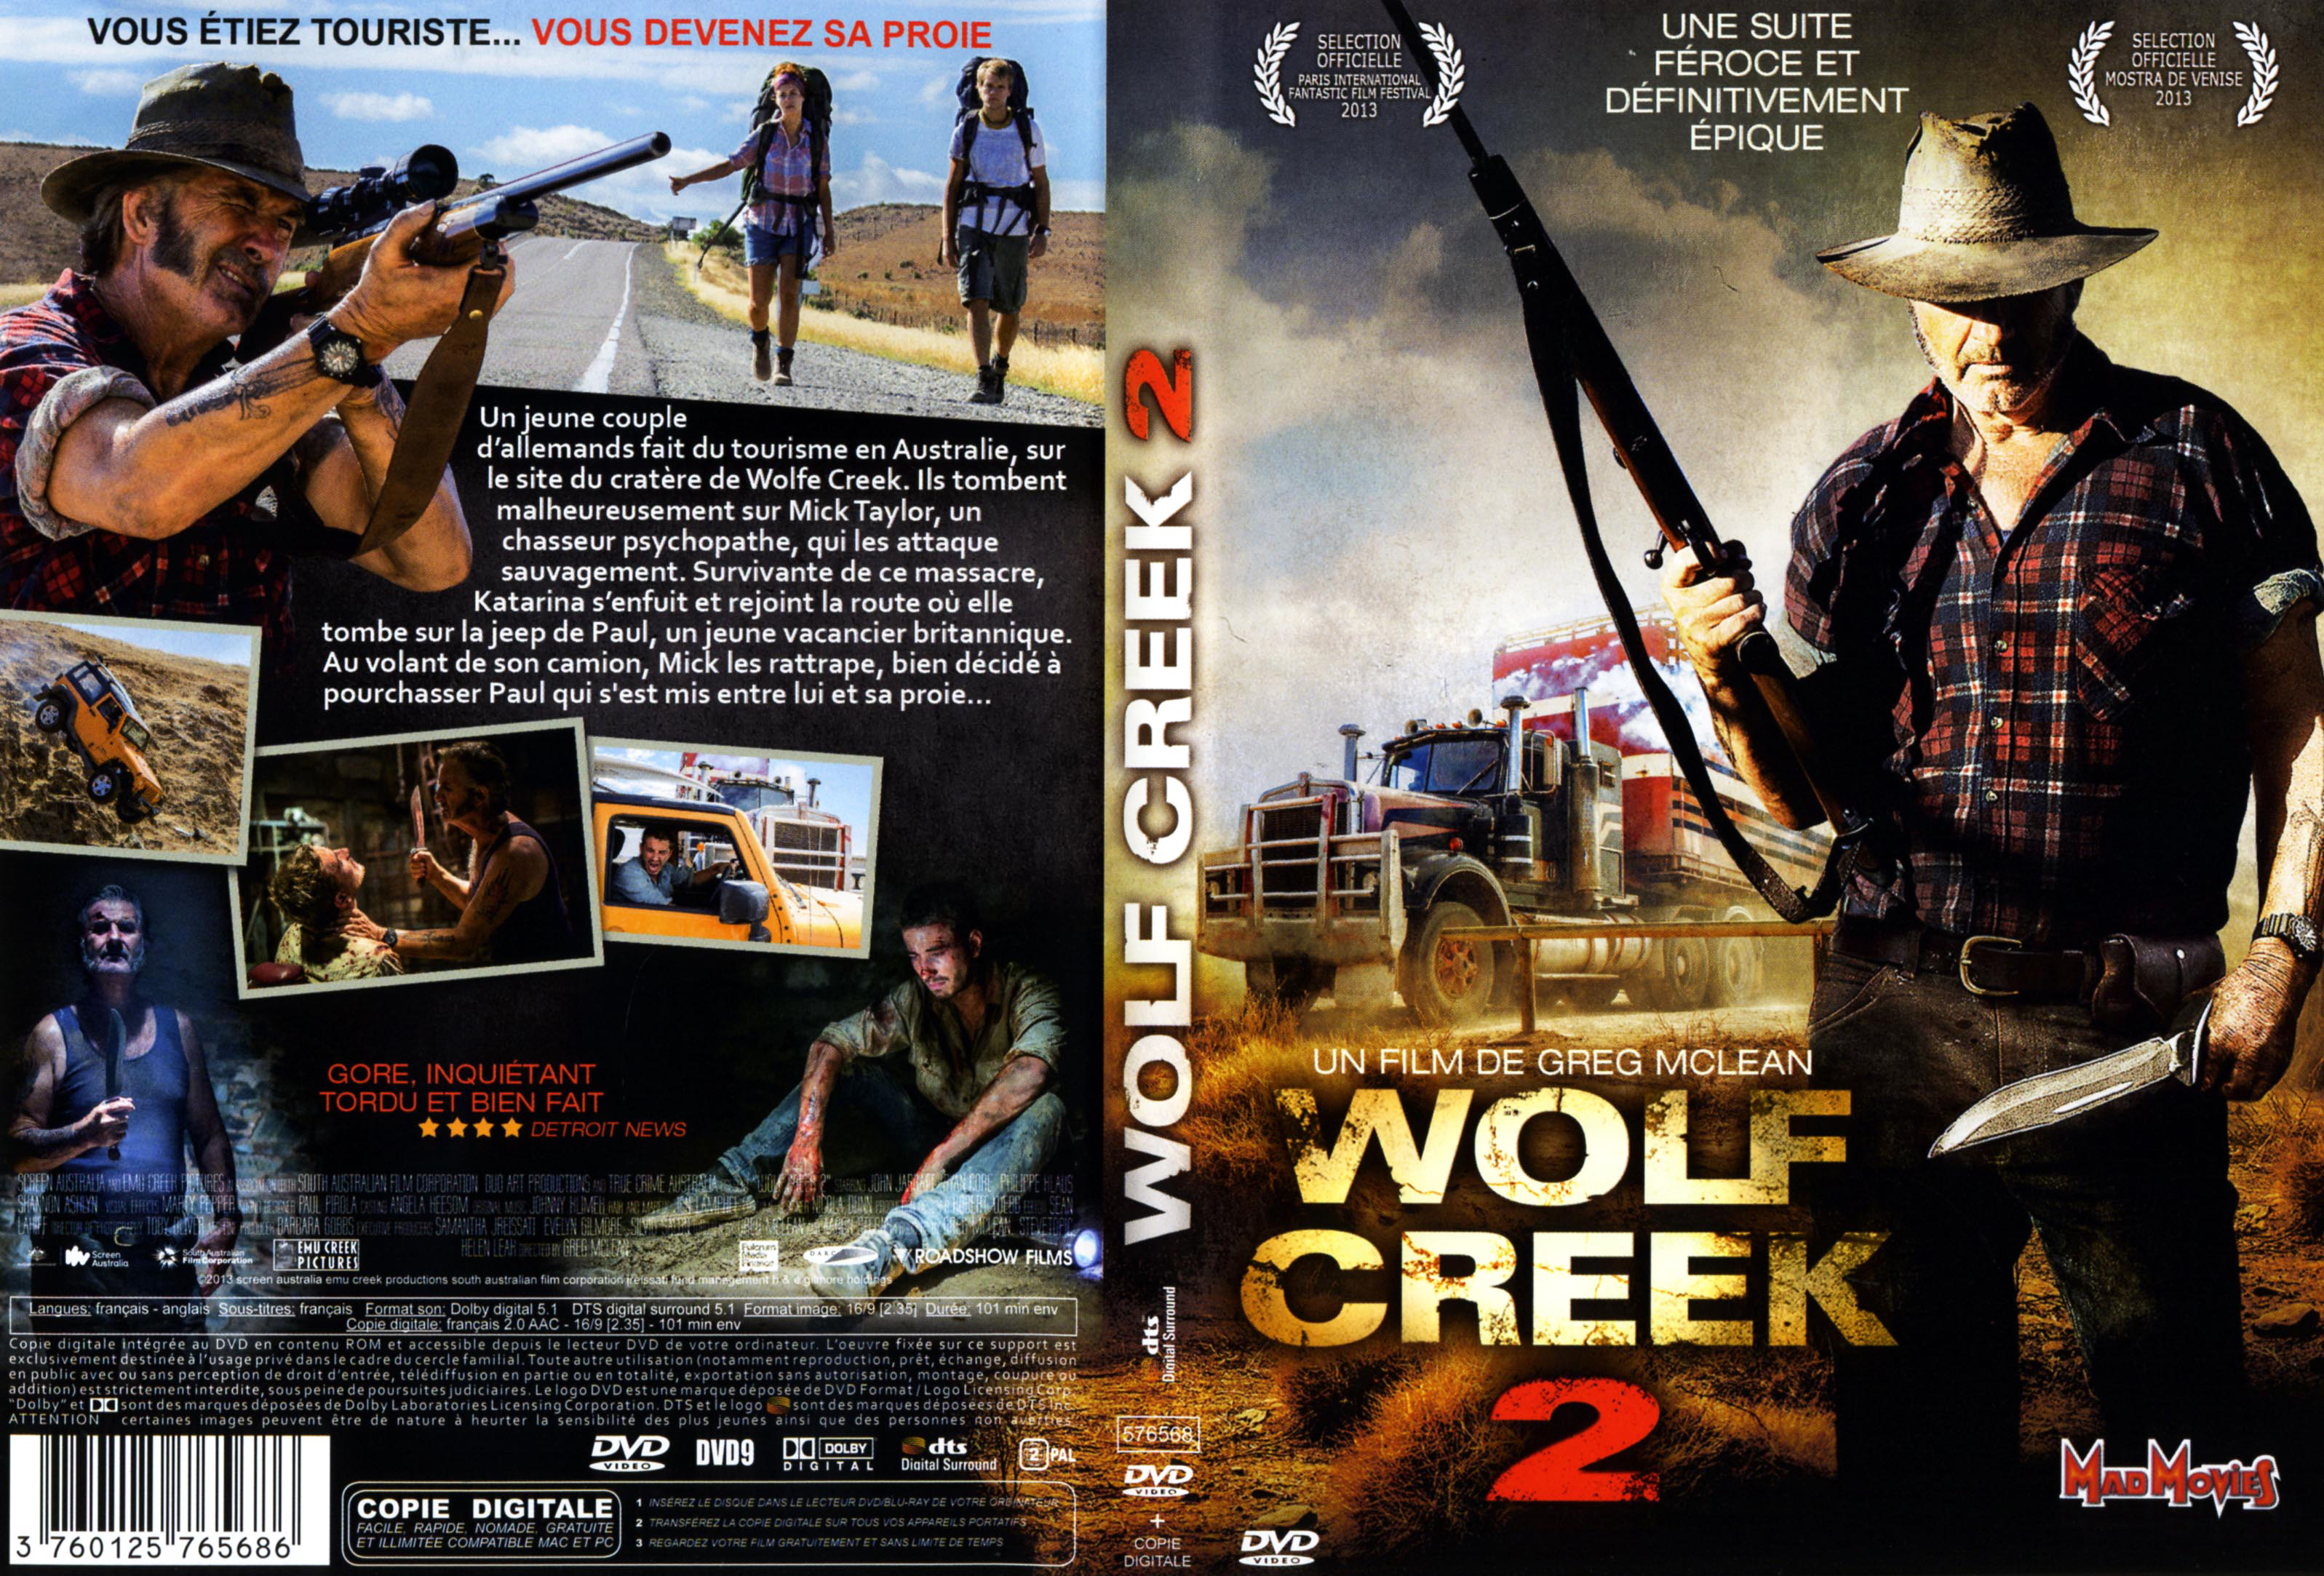 Jaquette DVD Wolf Creek 2